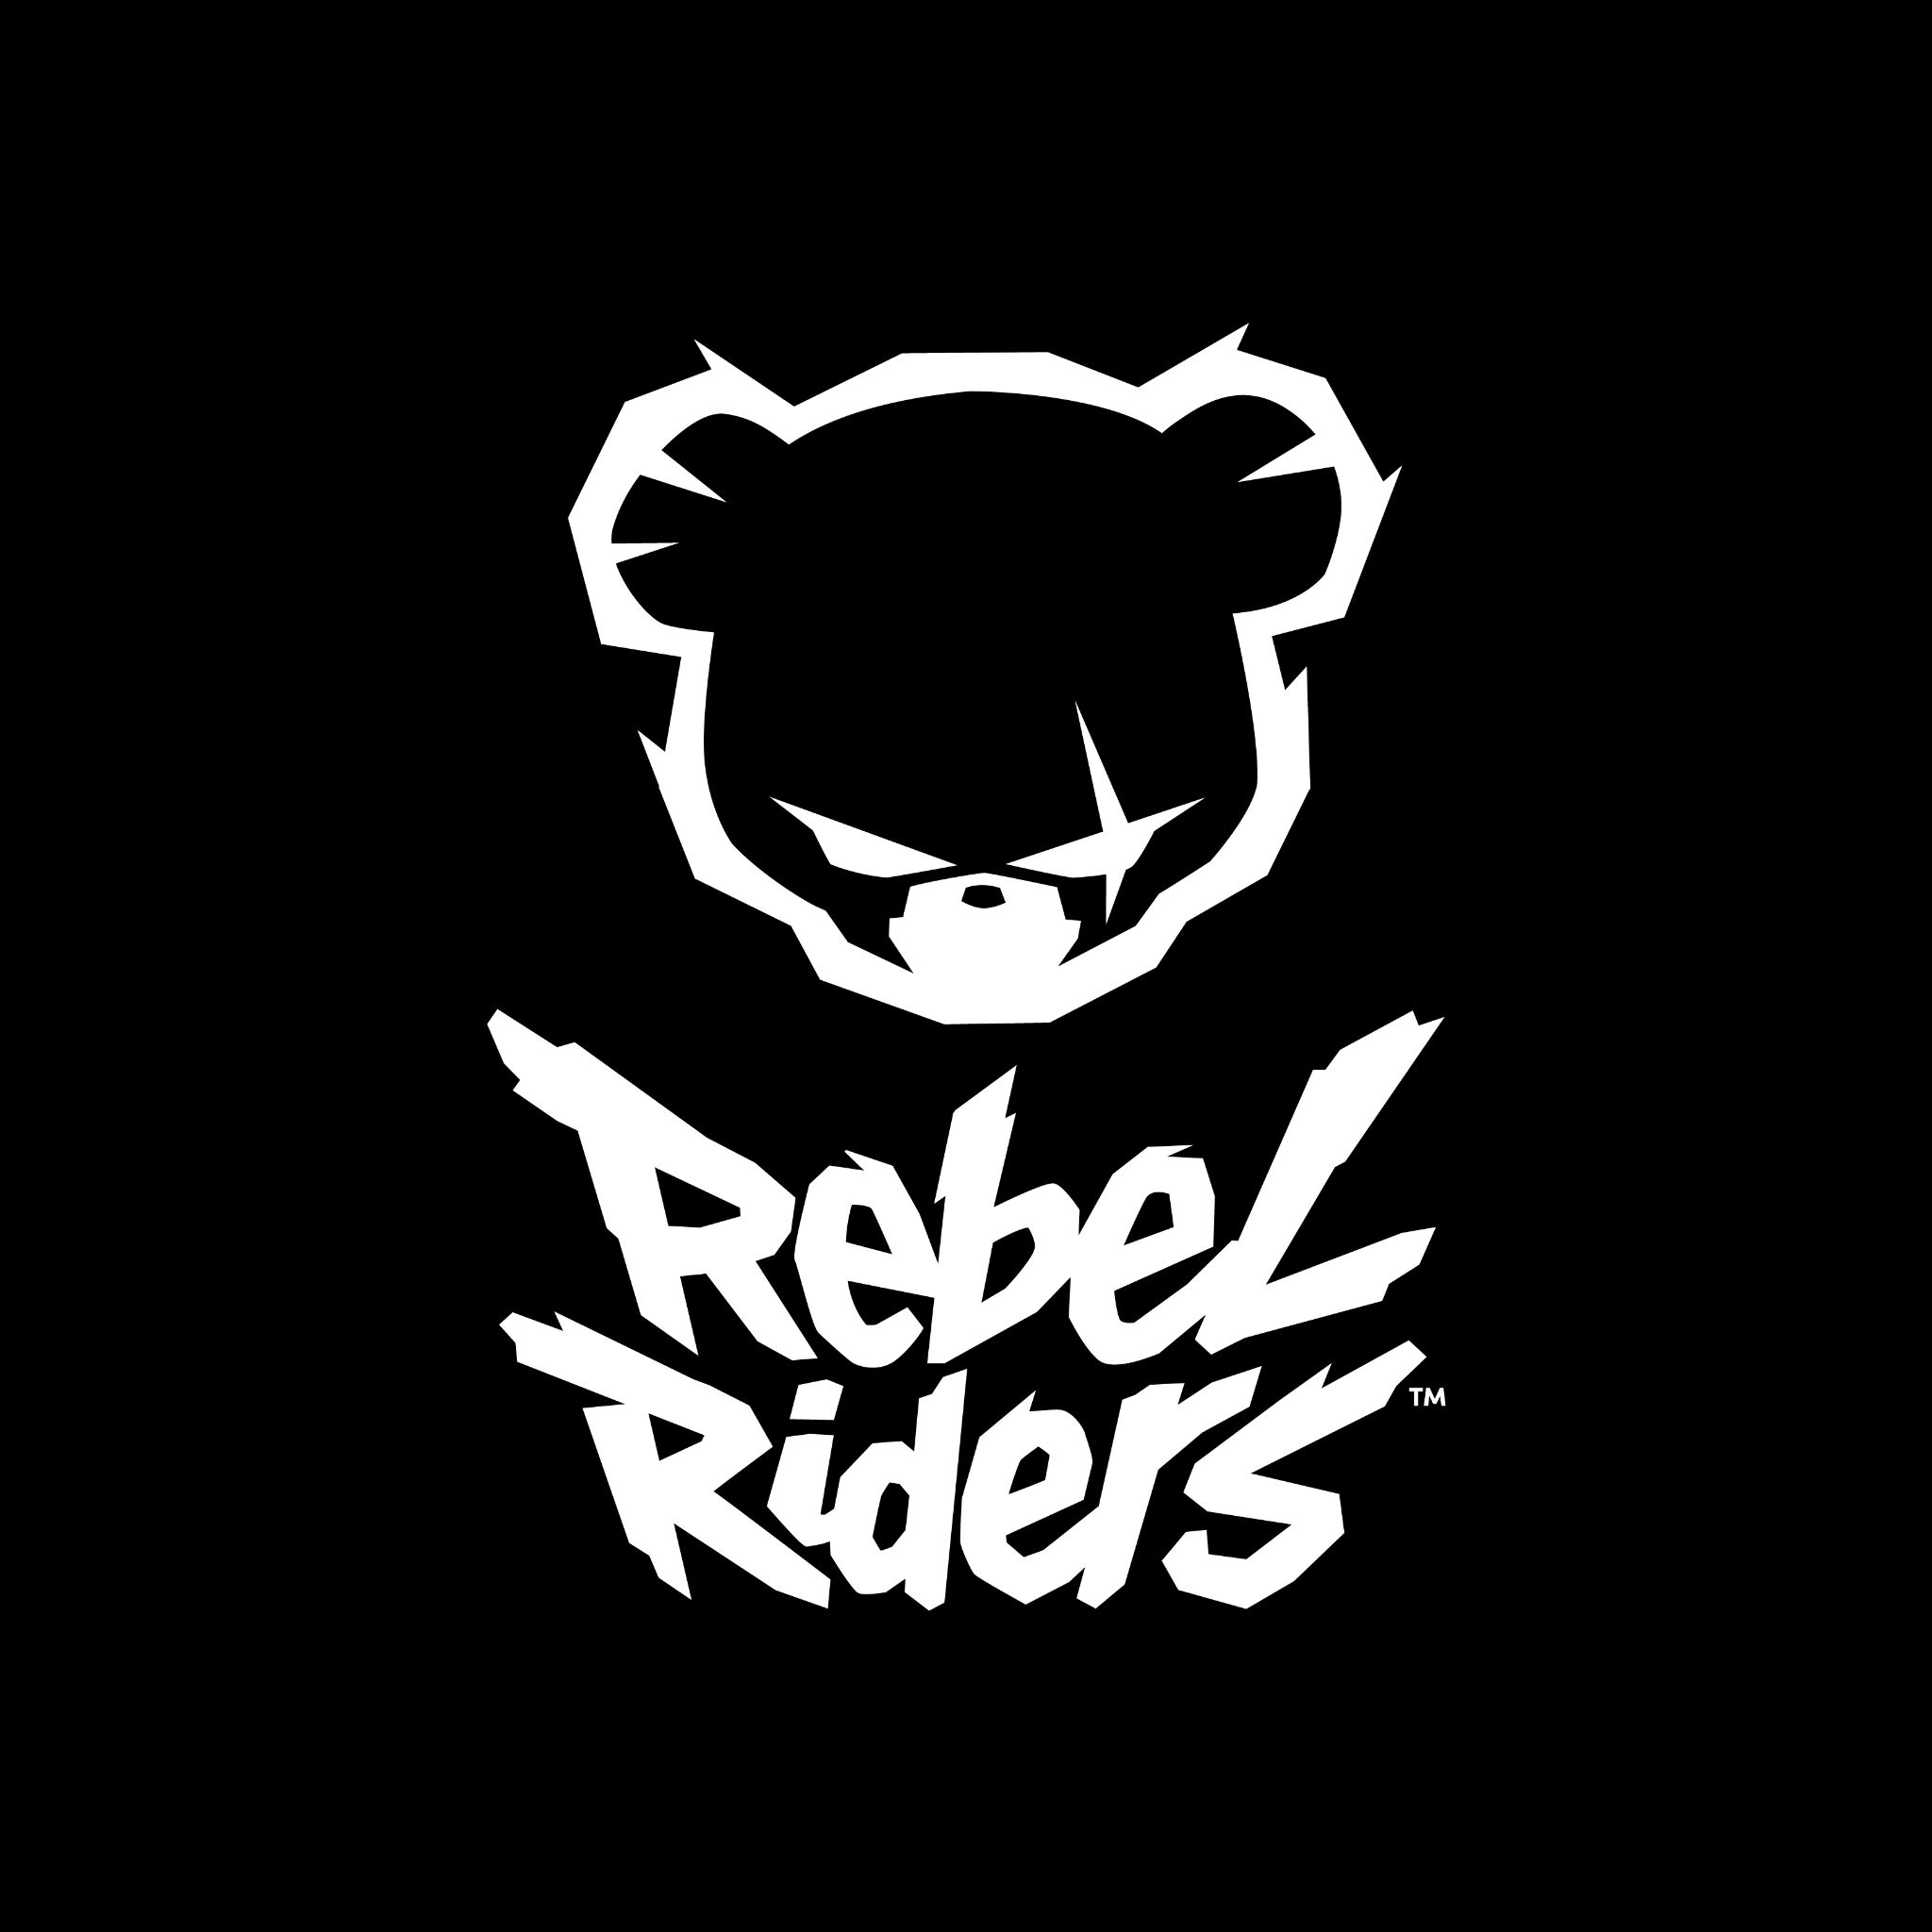 https://images.ctfassets.net/pc3i4f5nnp8d/1MmGGFgVDjhD4EcRPEYCbn/7d65009ee1b4b37ce39bb876f638d06c/biborg-work-king-rebel-riders-white-logo.jpg